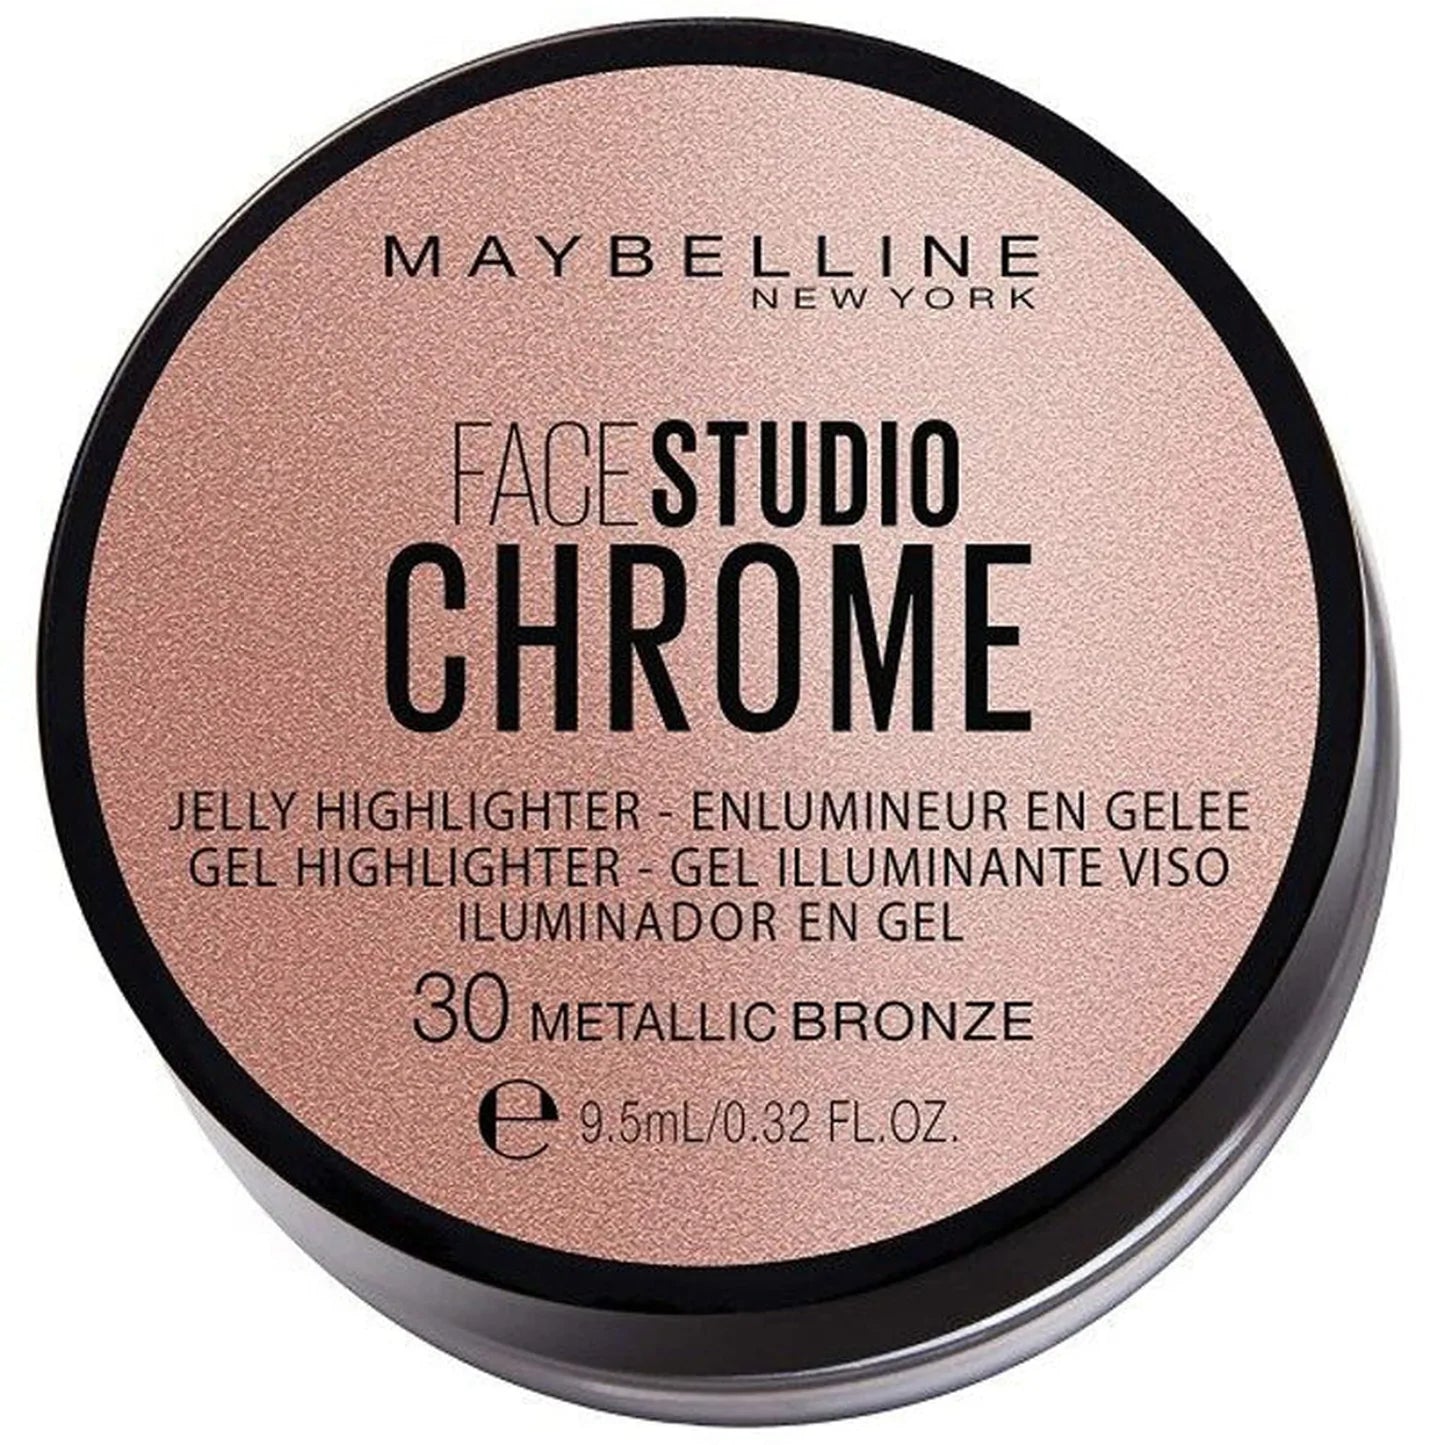 Maybelline Face Studio Chrome Jelly Highlighter - 30 Metallic Bronze